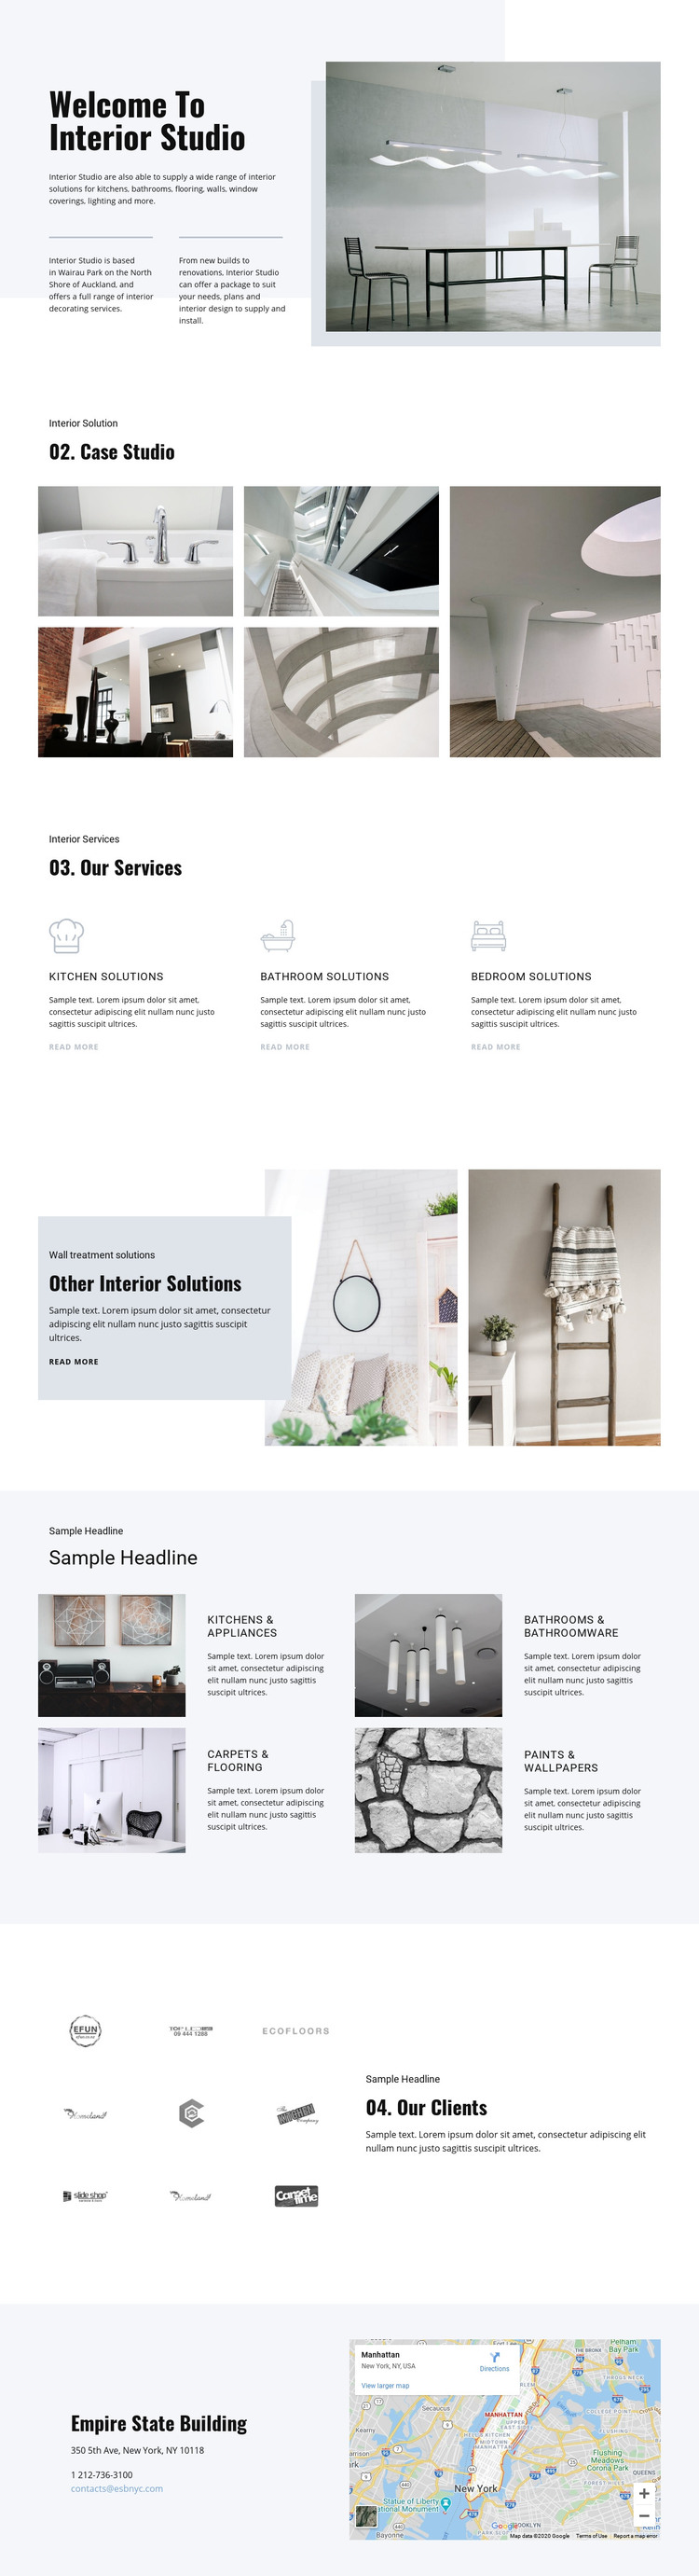 Welcome to interior studio Homepage Design